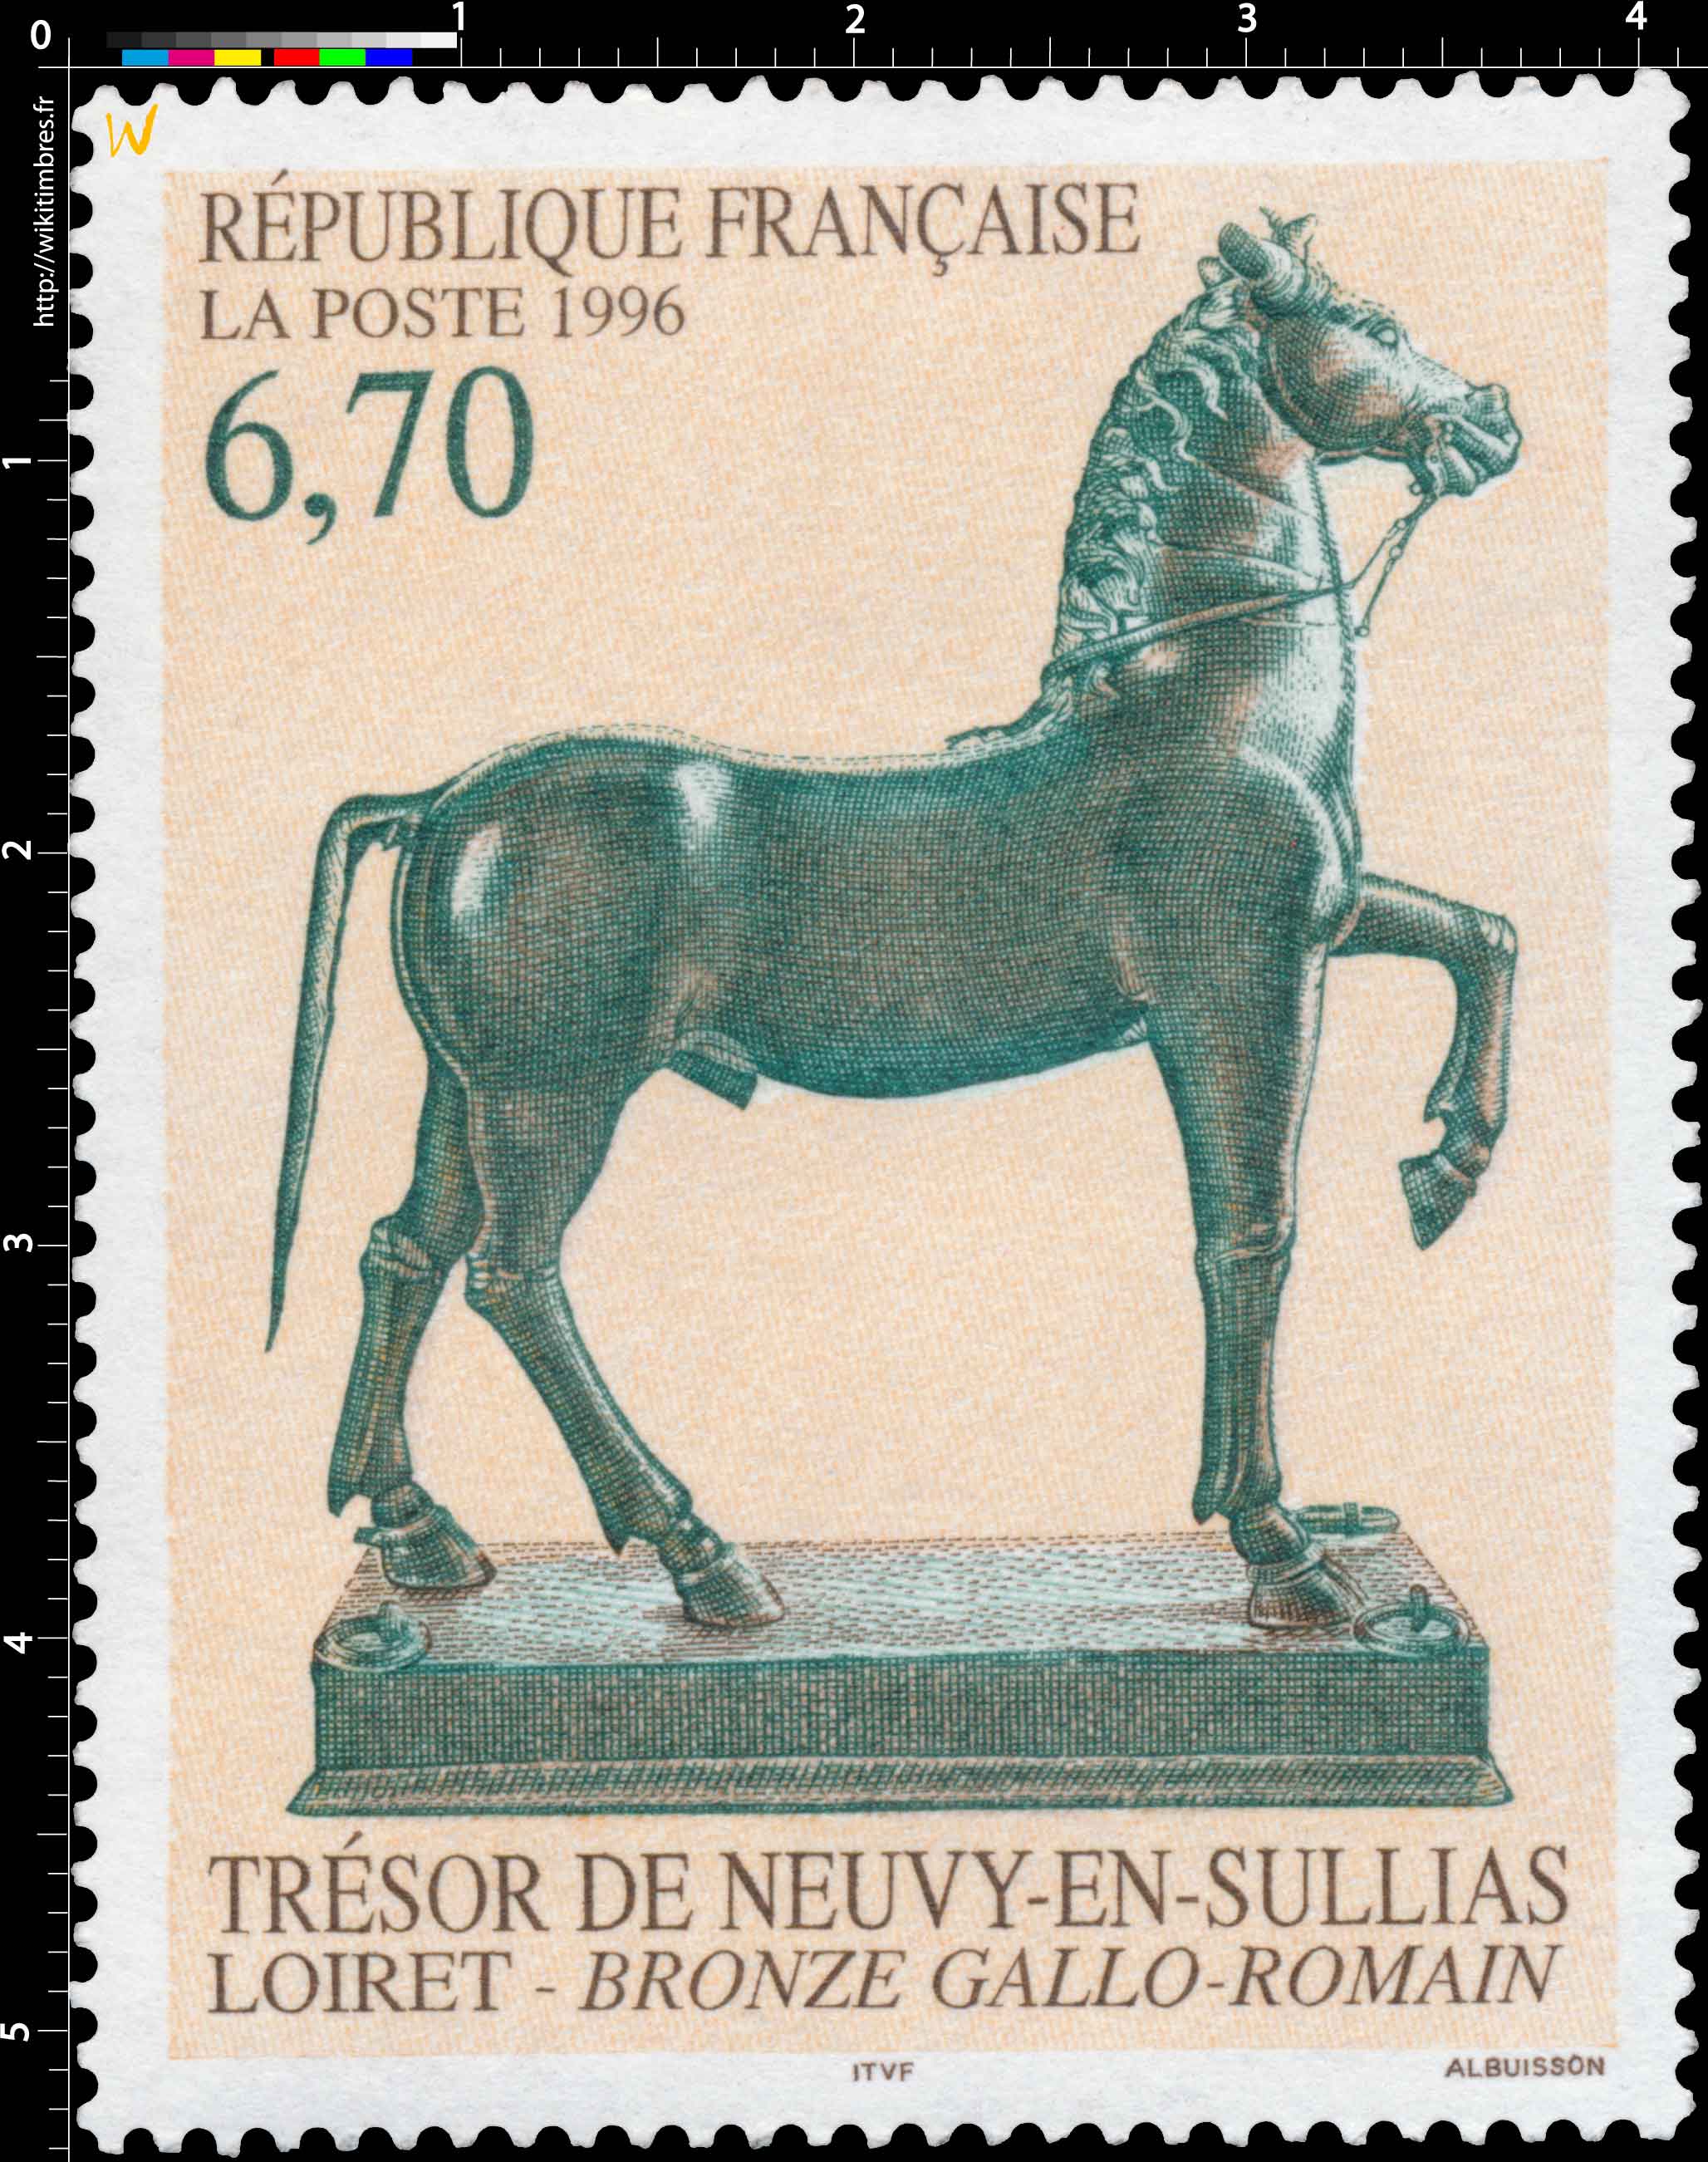 1996 TRÉSOR DE NEUVY-EN-SULLIAS LOIRET - BRONZE GALLO - ROMAIN